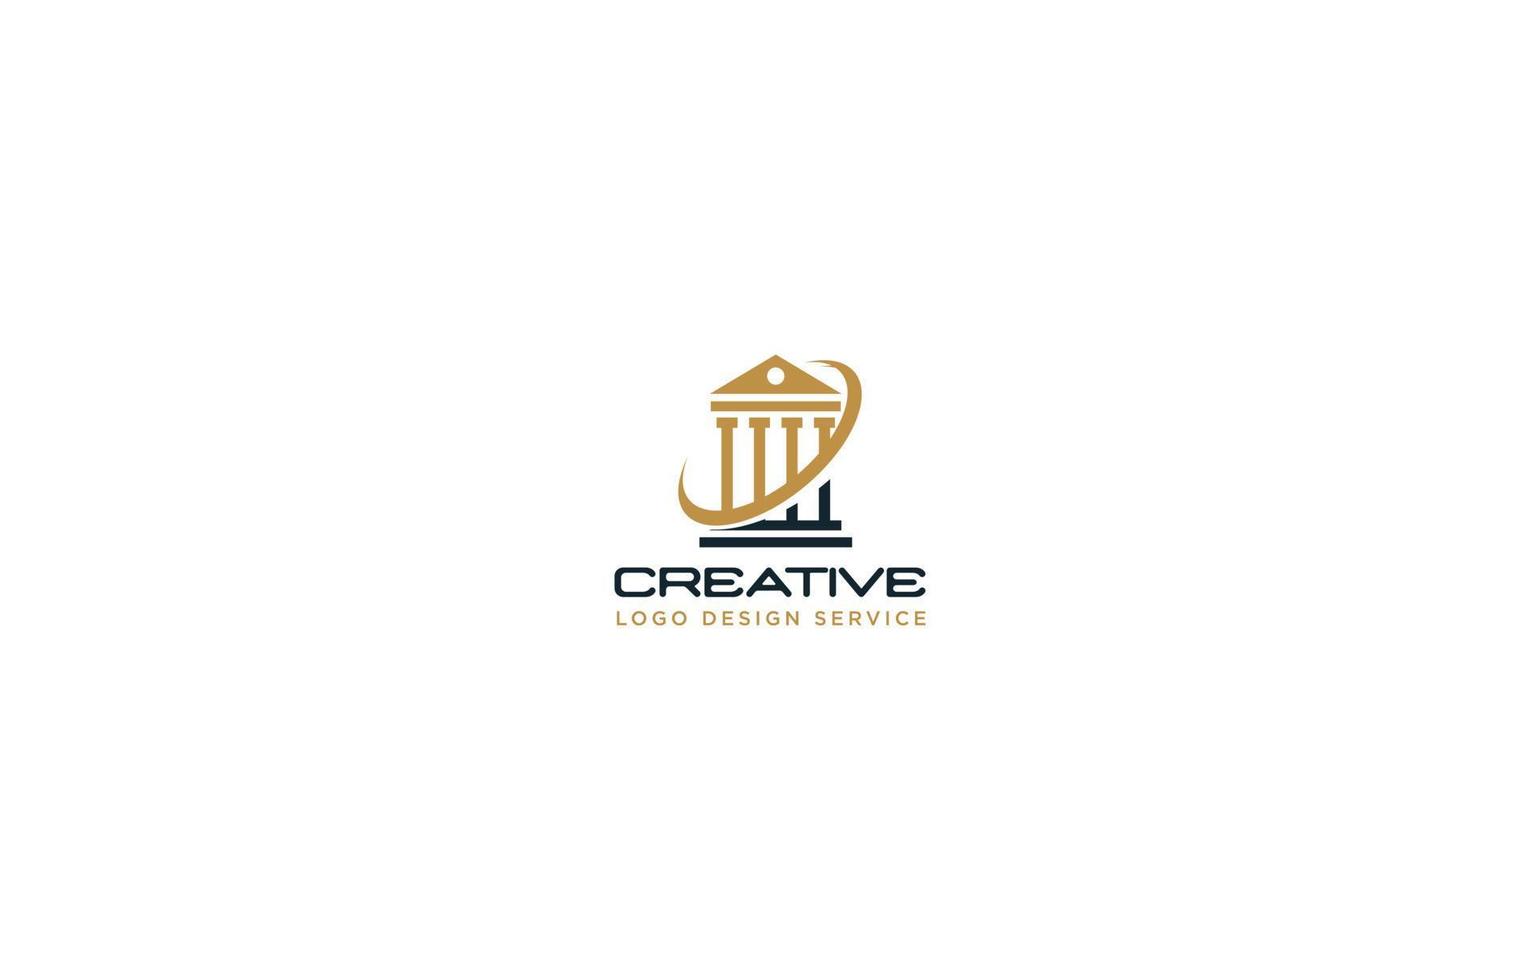 vektor lag fast logotyp eller advokat logotyp med kreativ element stil elegant logotyp